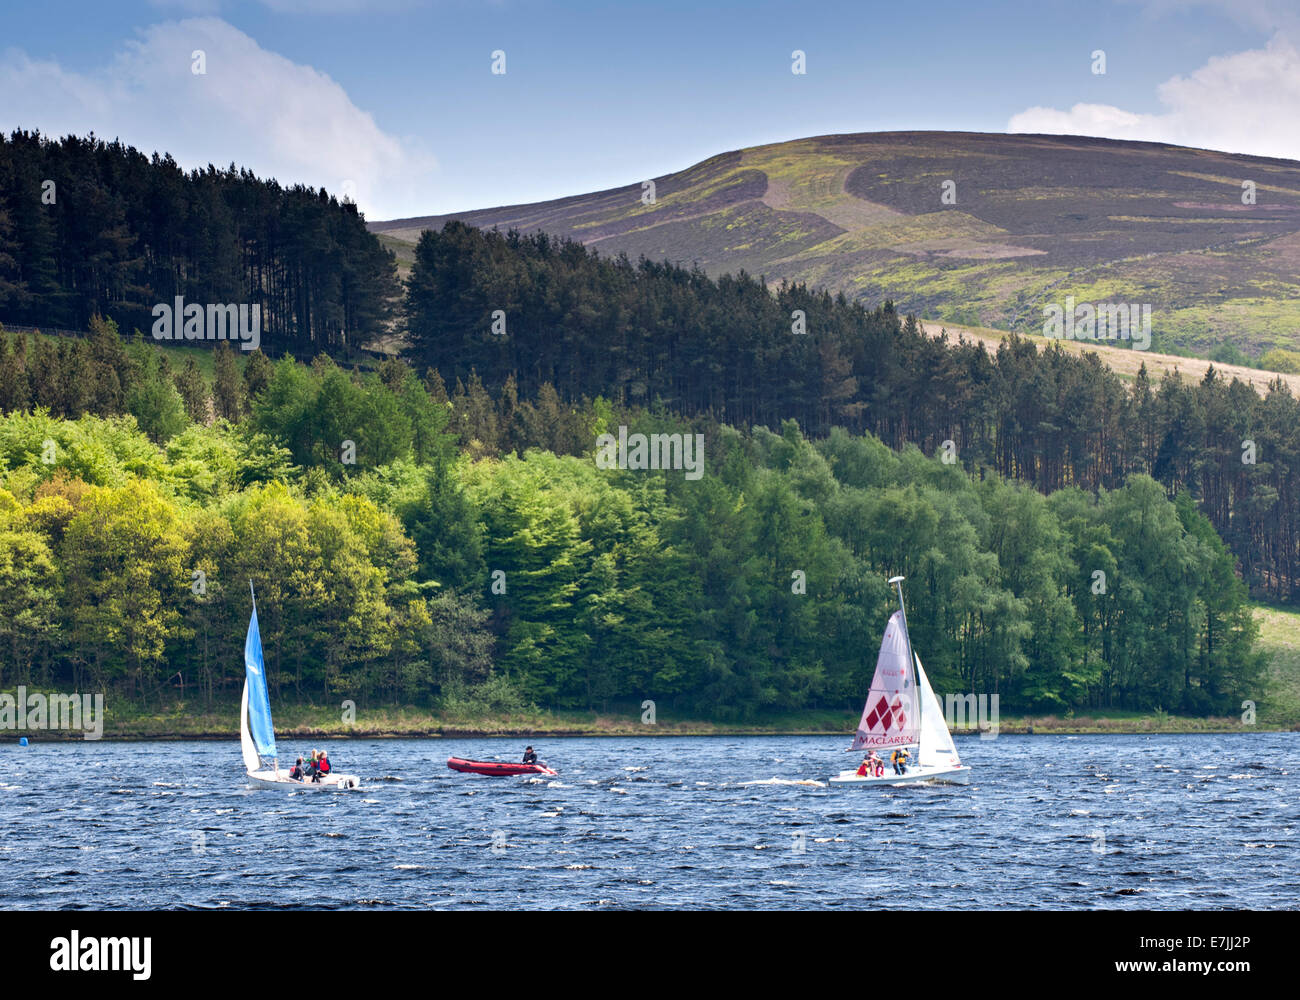 Sailing on Errwood Reservoir, Goyt Valley, Peak District National Park, Derbyshire, England, UK Stock Photo